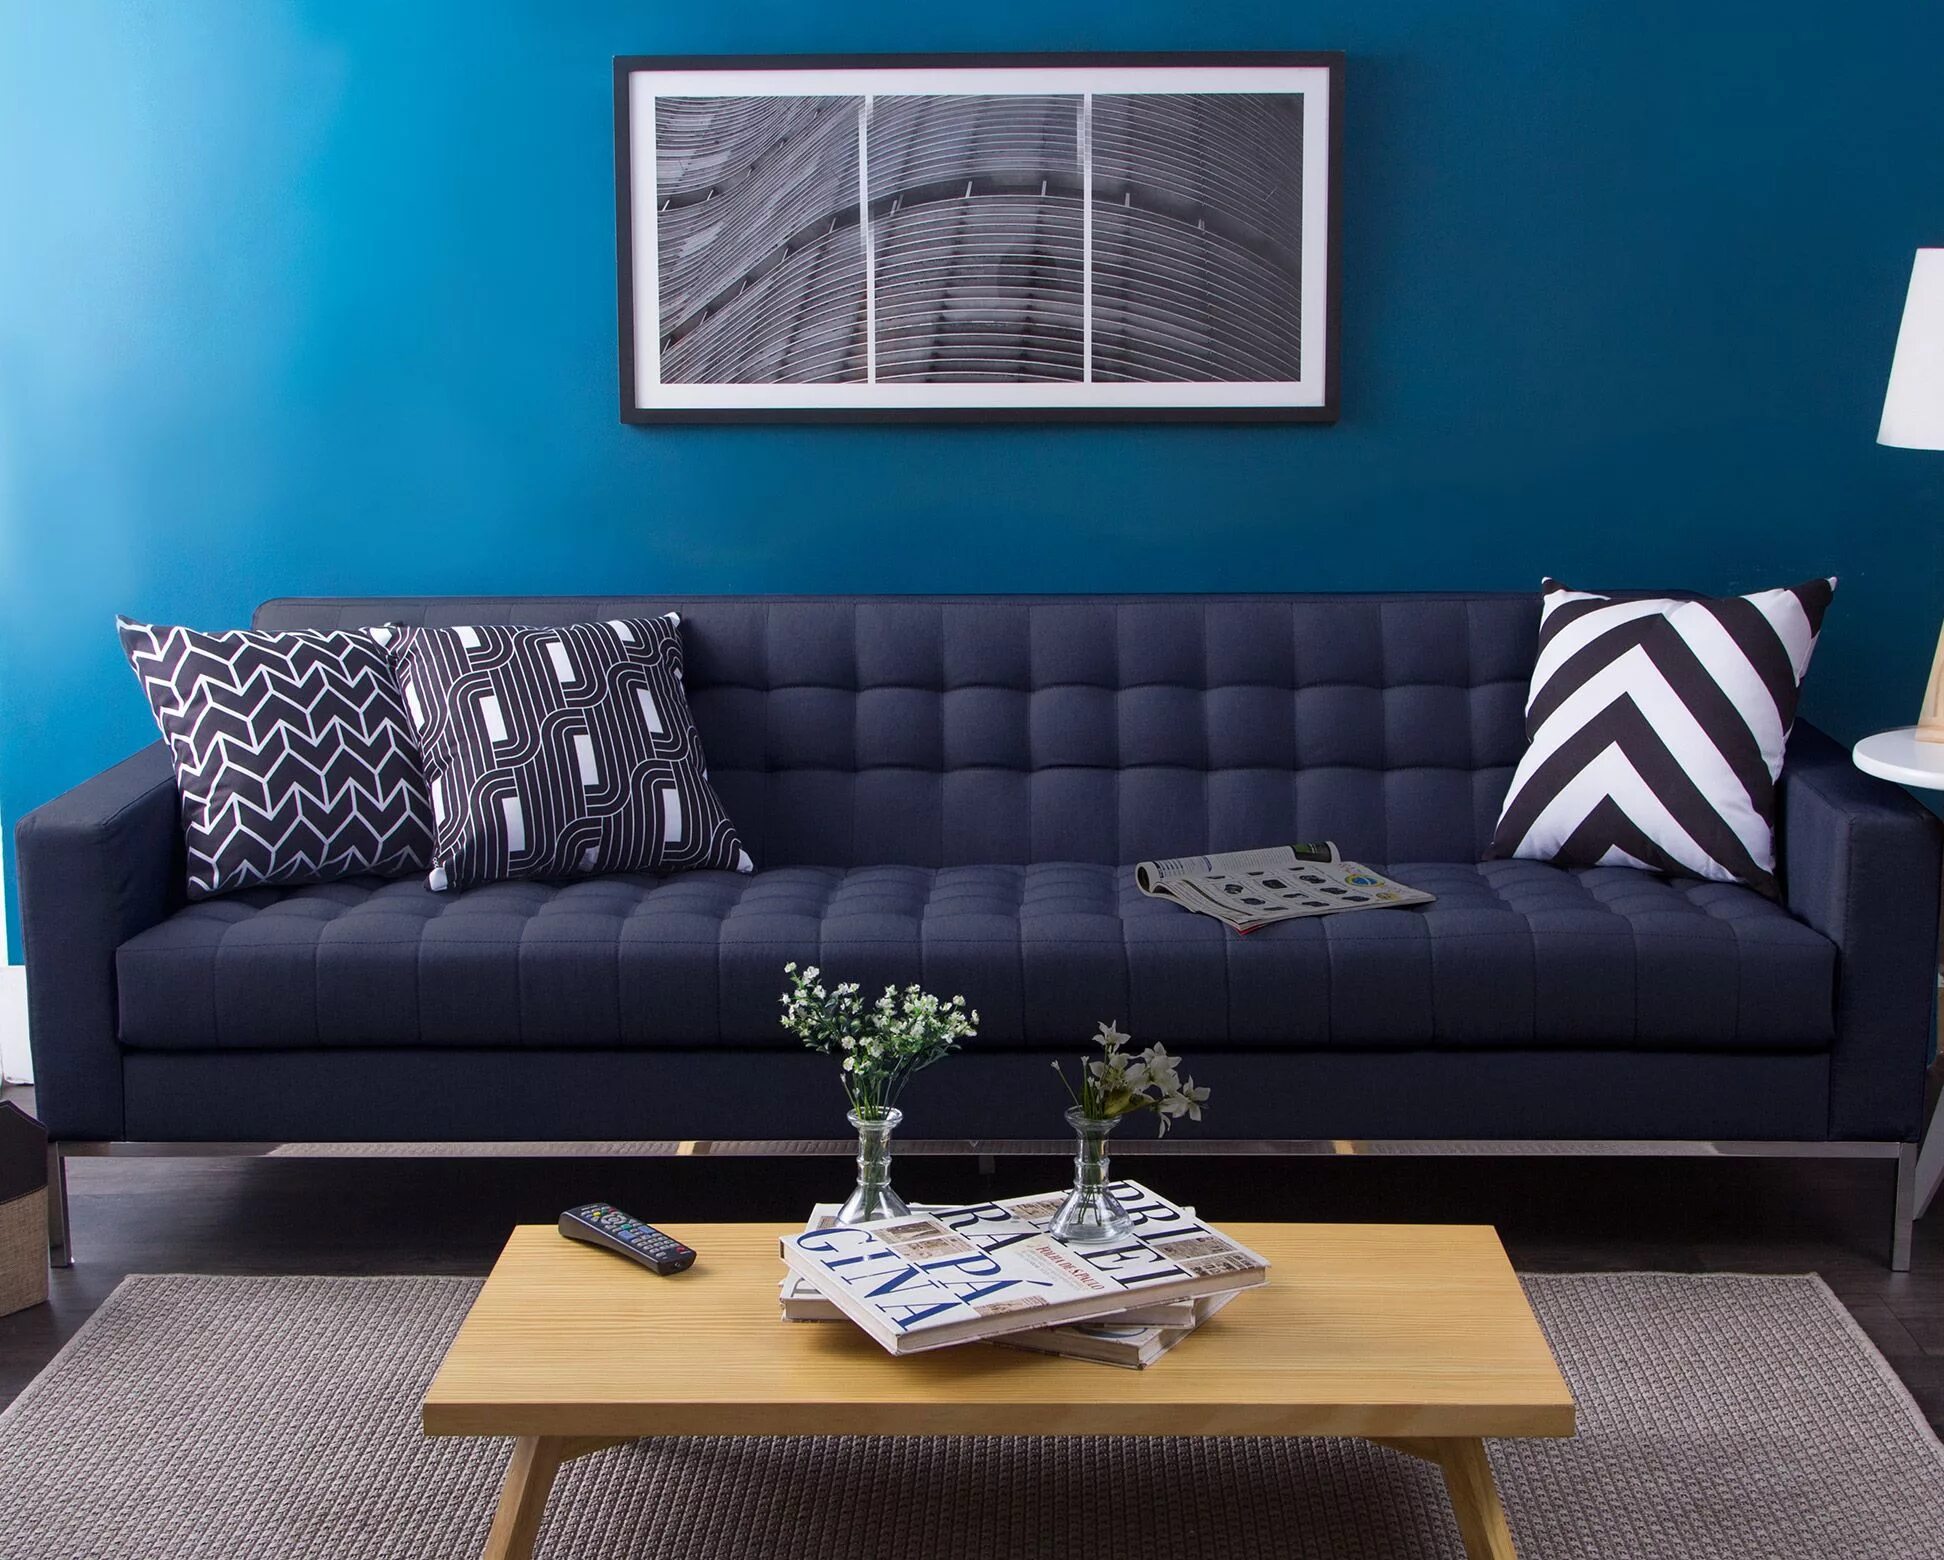 Синий диван. Старый синий диван. Дымчато синий диван. Диван на синем фоне. Современный синий диван в студии.